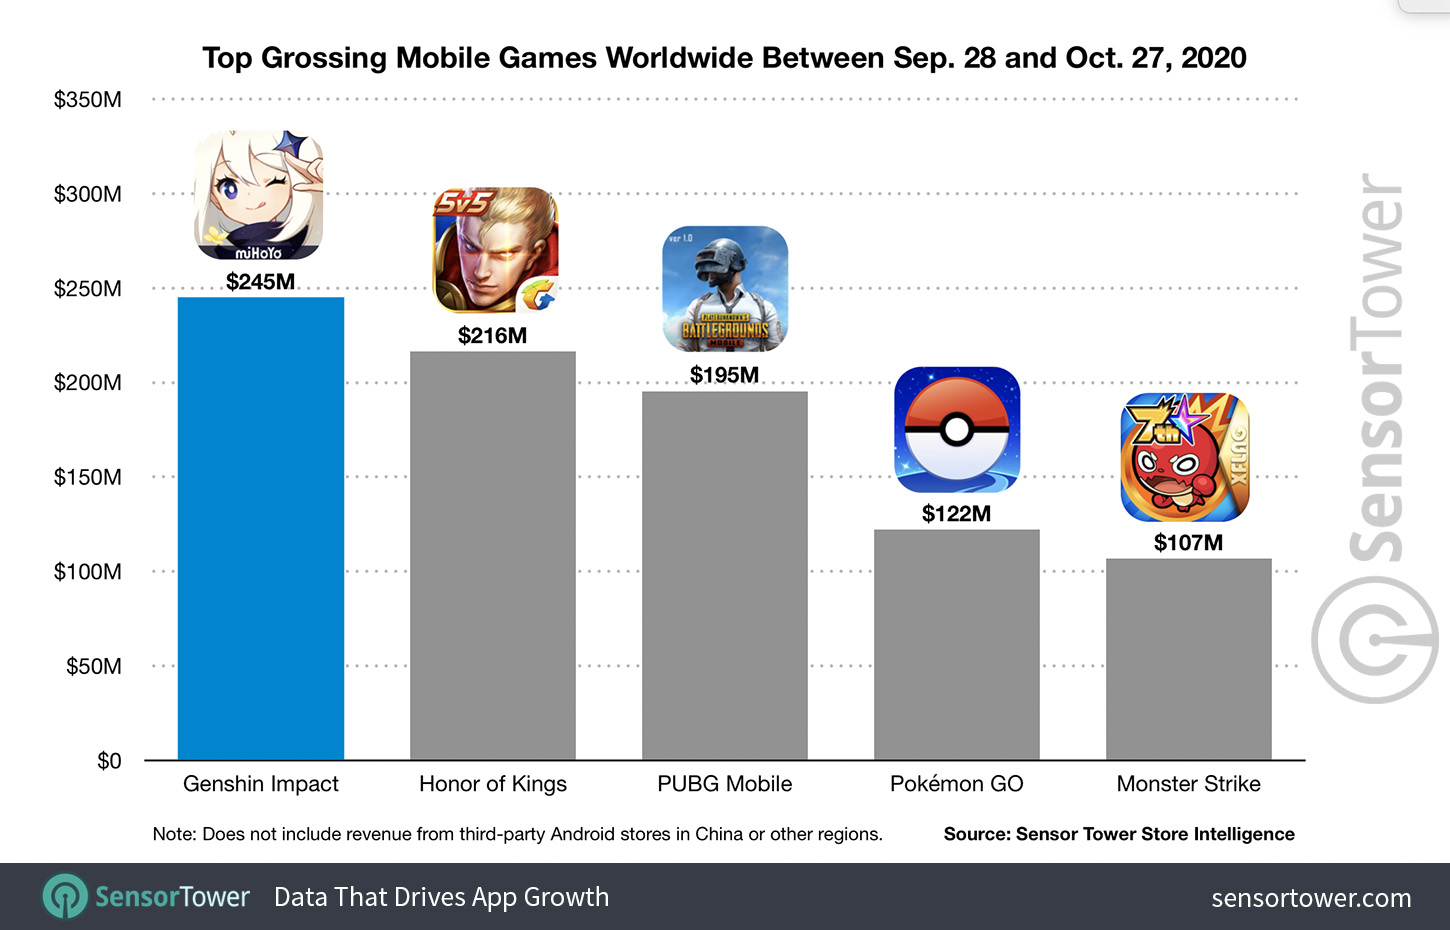 Top Grossing Mobile Games Worldwide Between September 28 and October 27, 2020